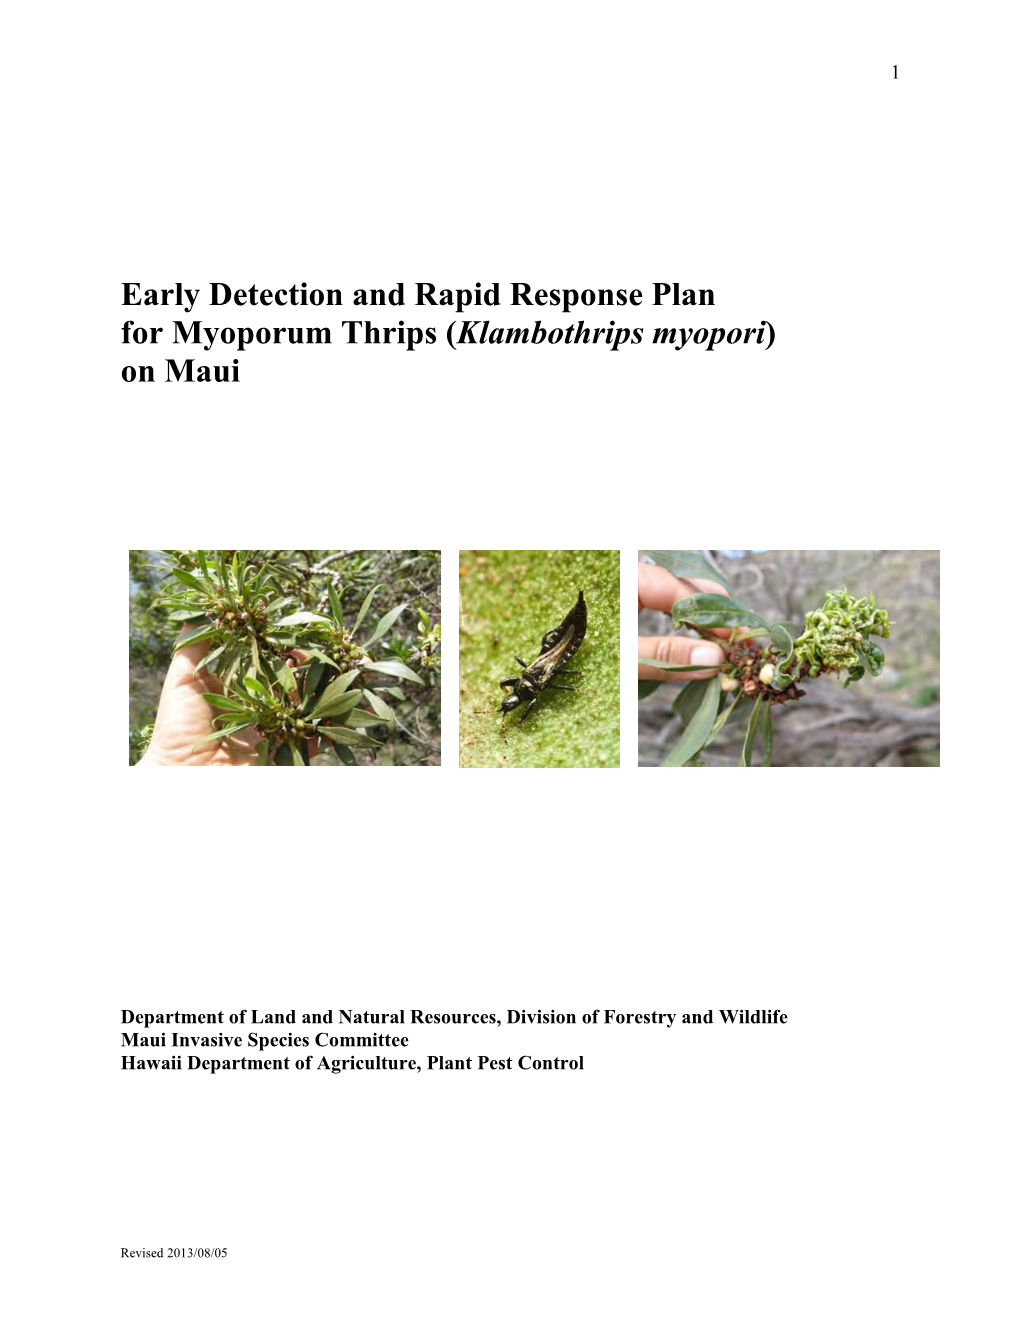 Early Detection and Rapid Response Plan for Myoporum Thrips (Klambothrips Myopori) on Maui